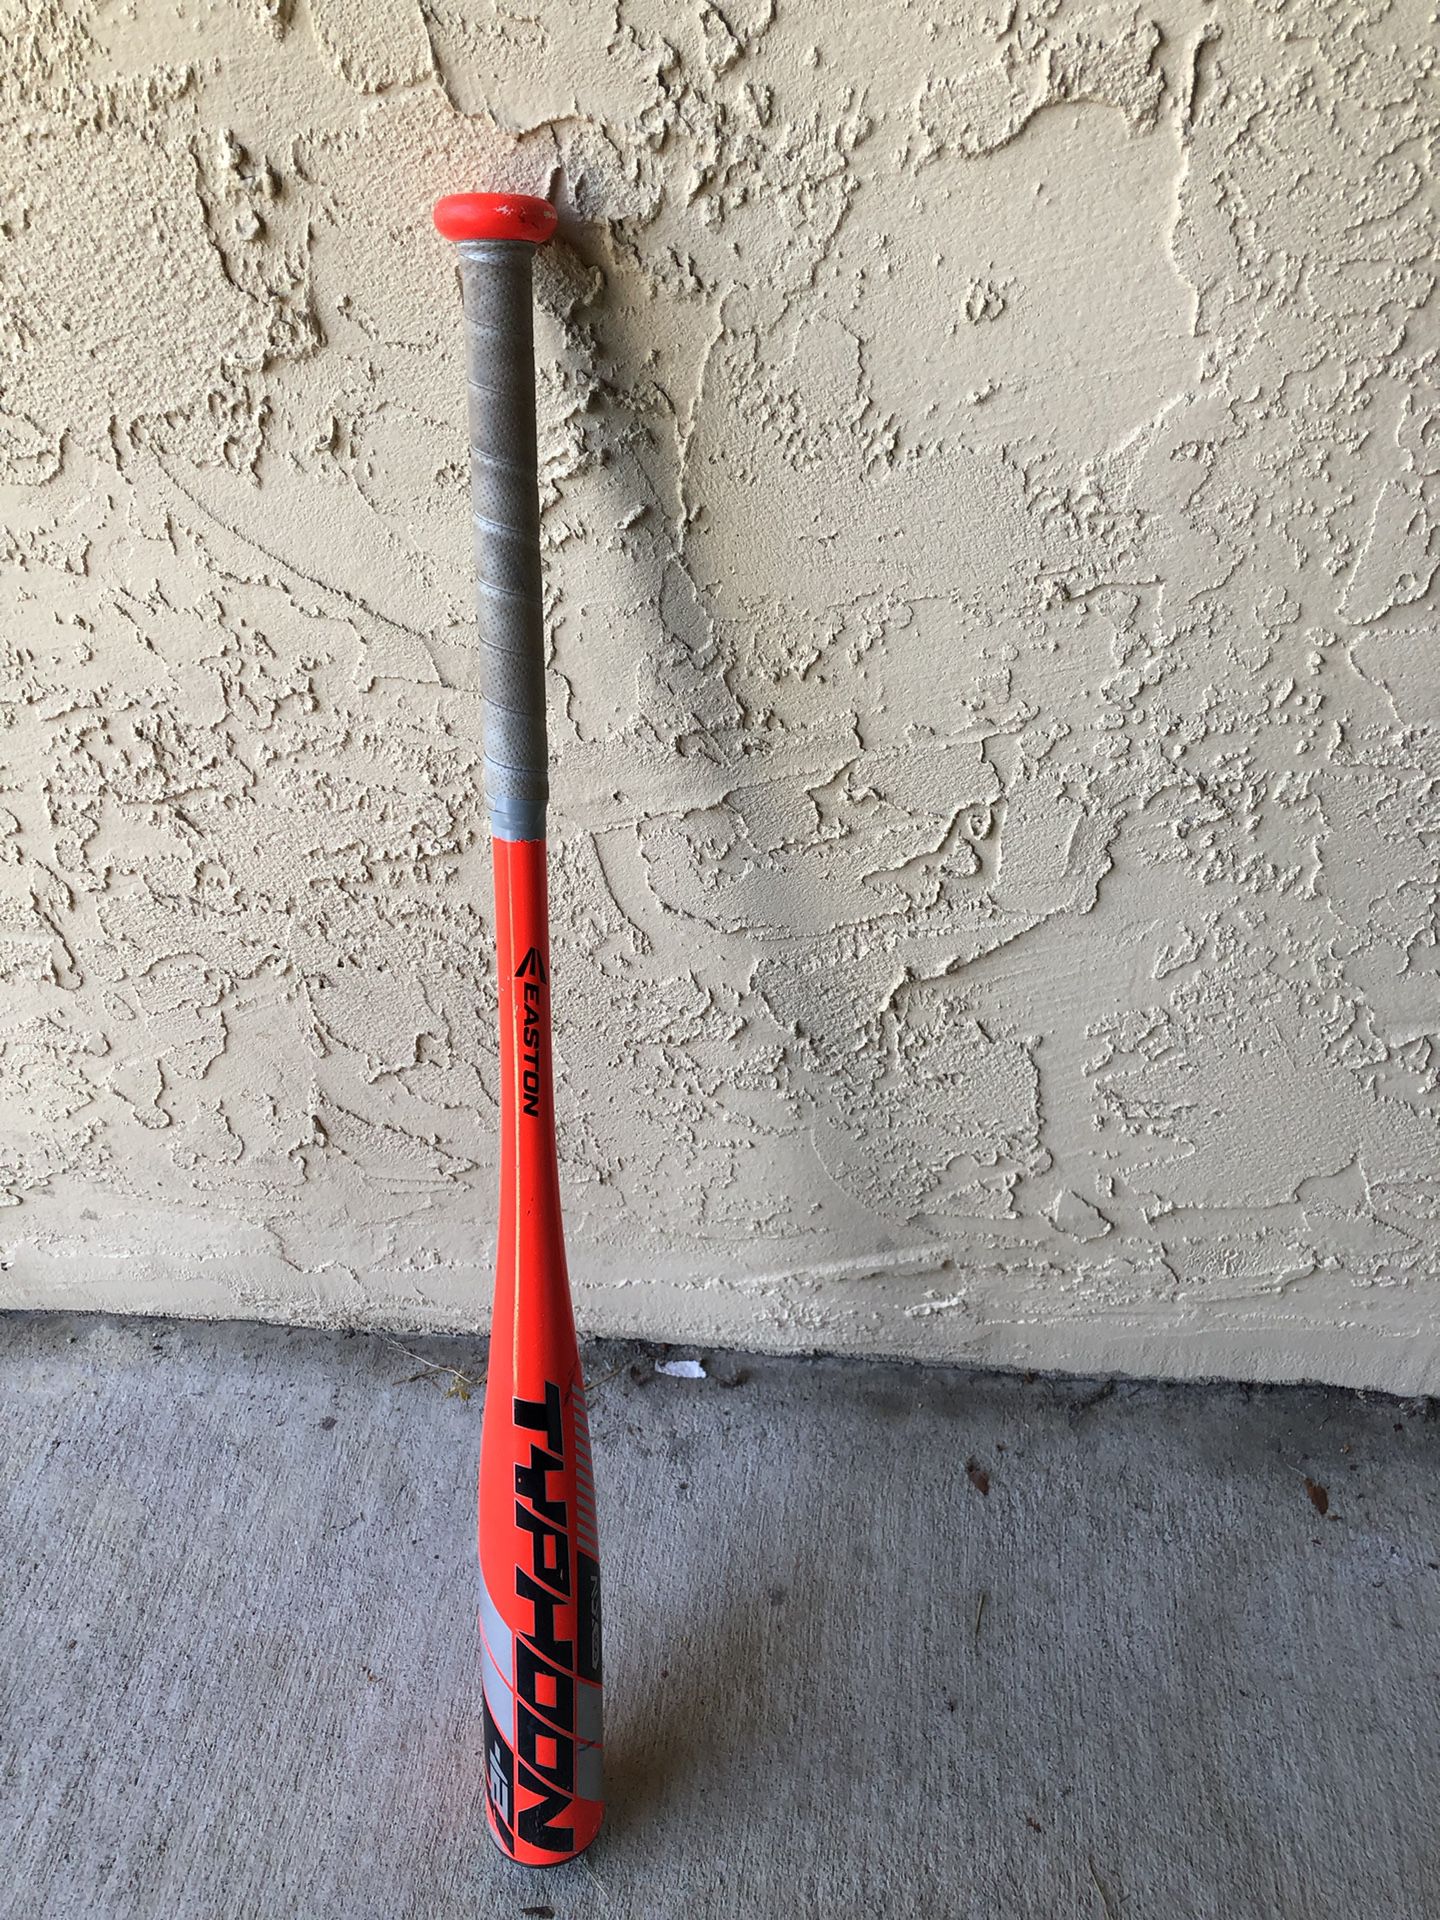 Easton Typhoon Baseball Bat